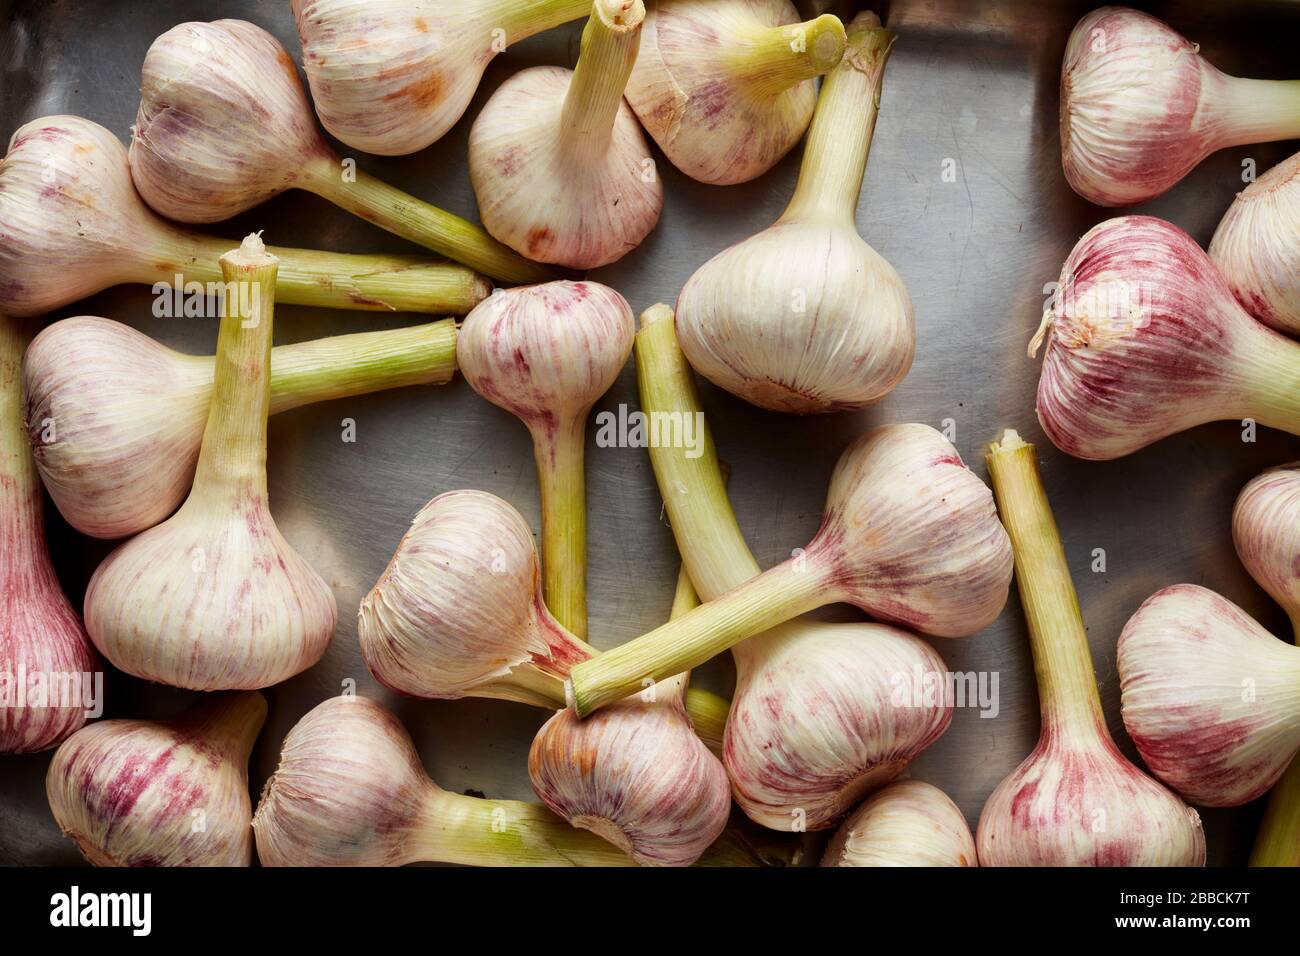 garlic bulbs group tray Garlic Allium Sativum bulbs cook ingredient Stock Photo